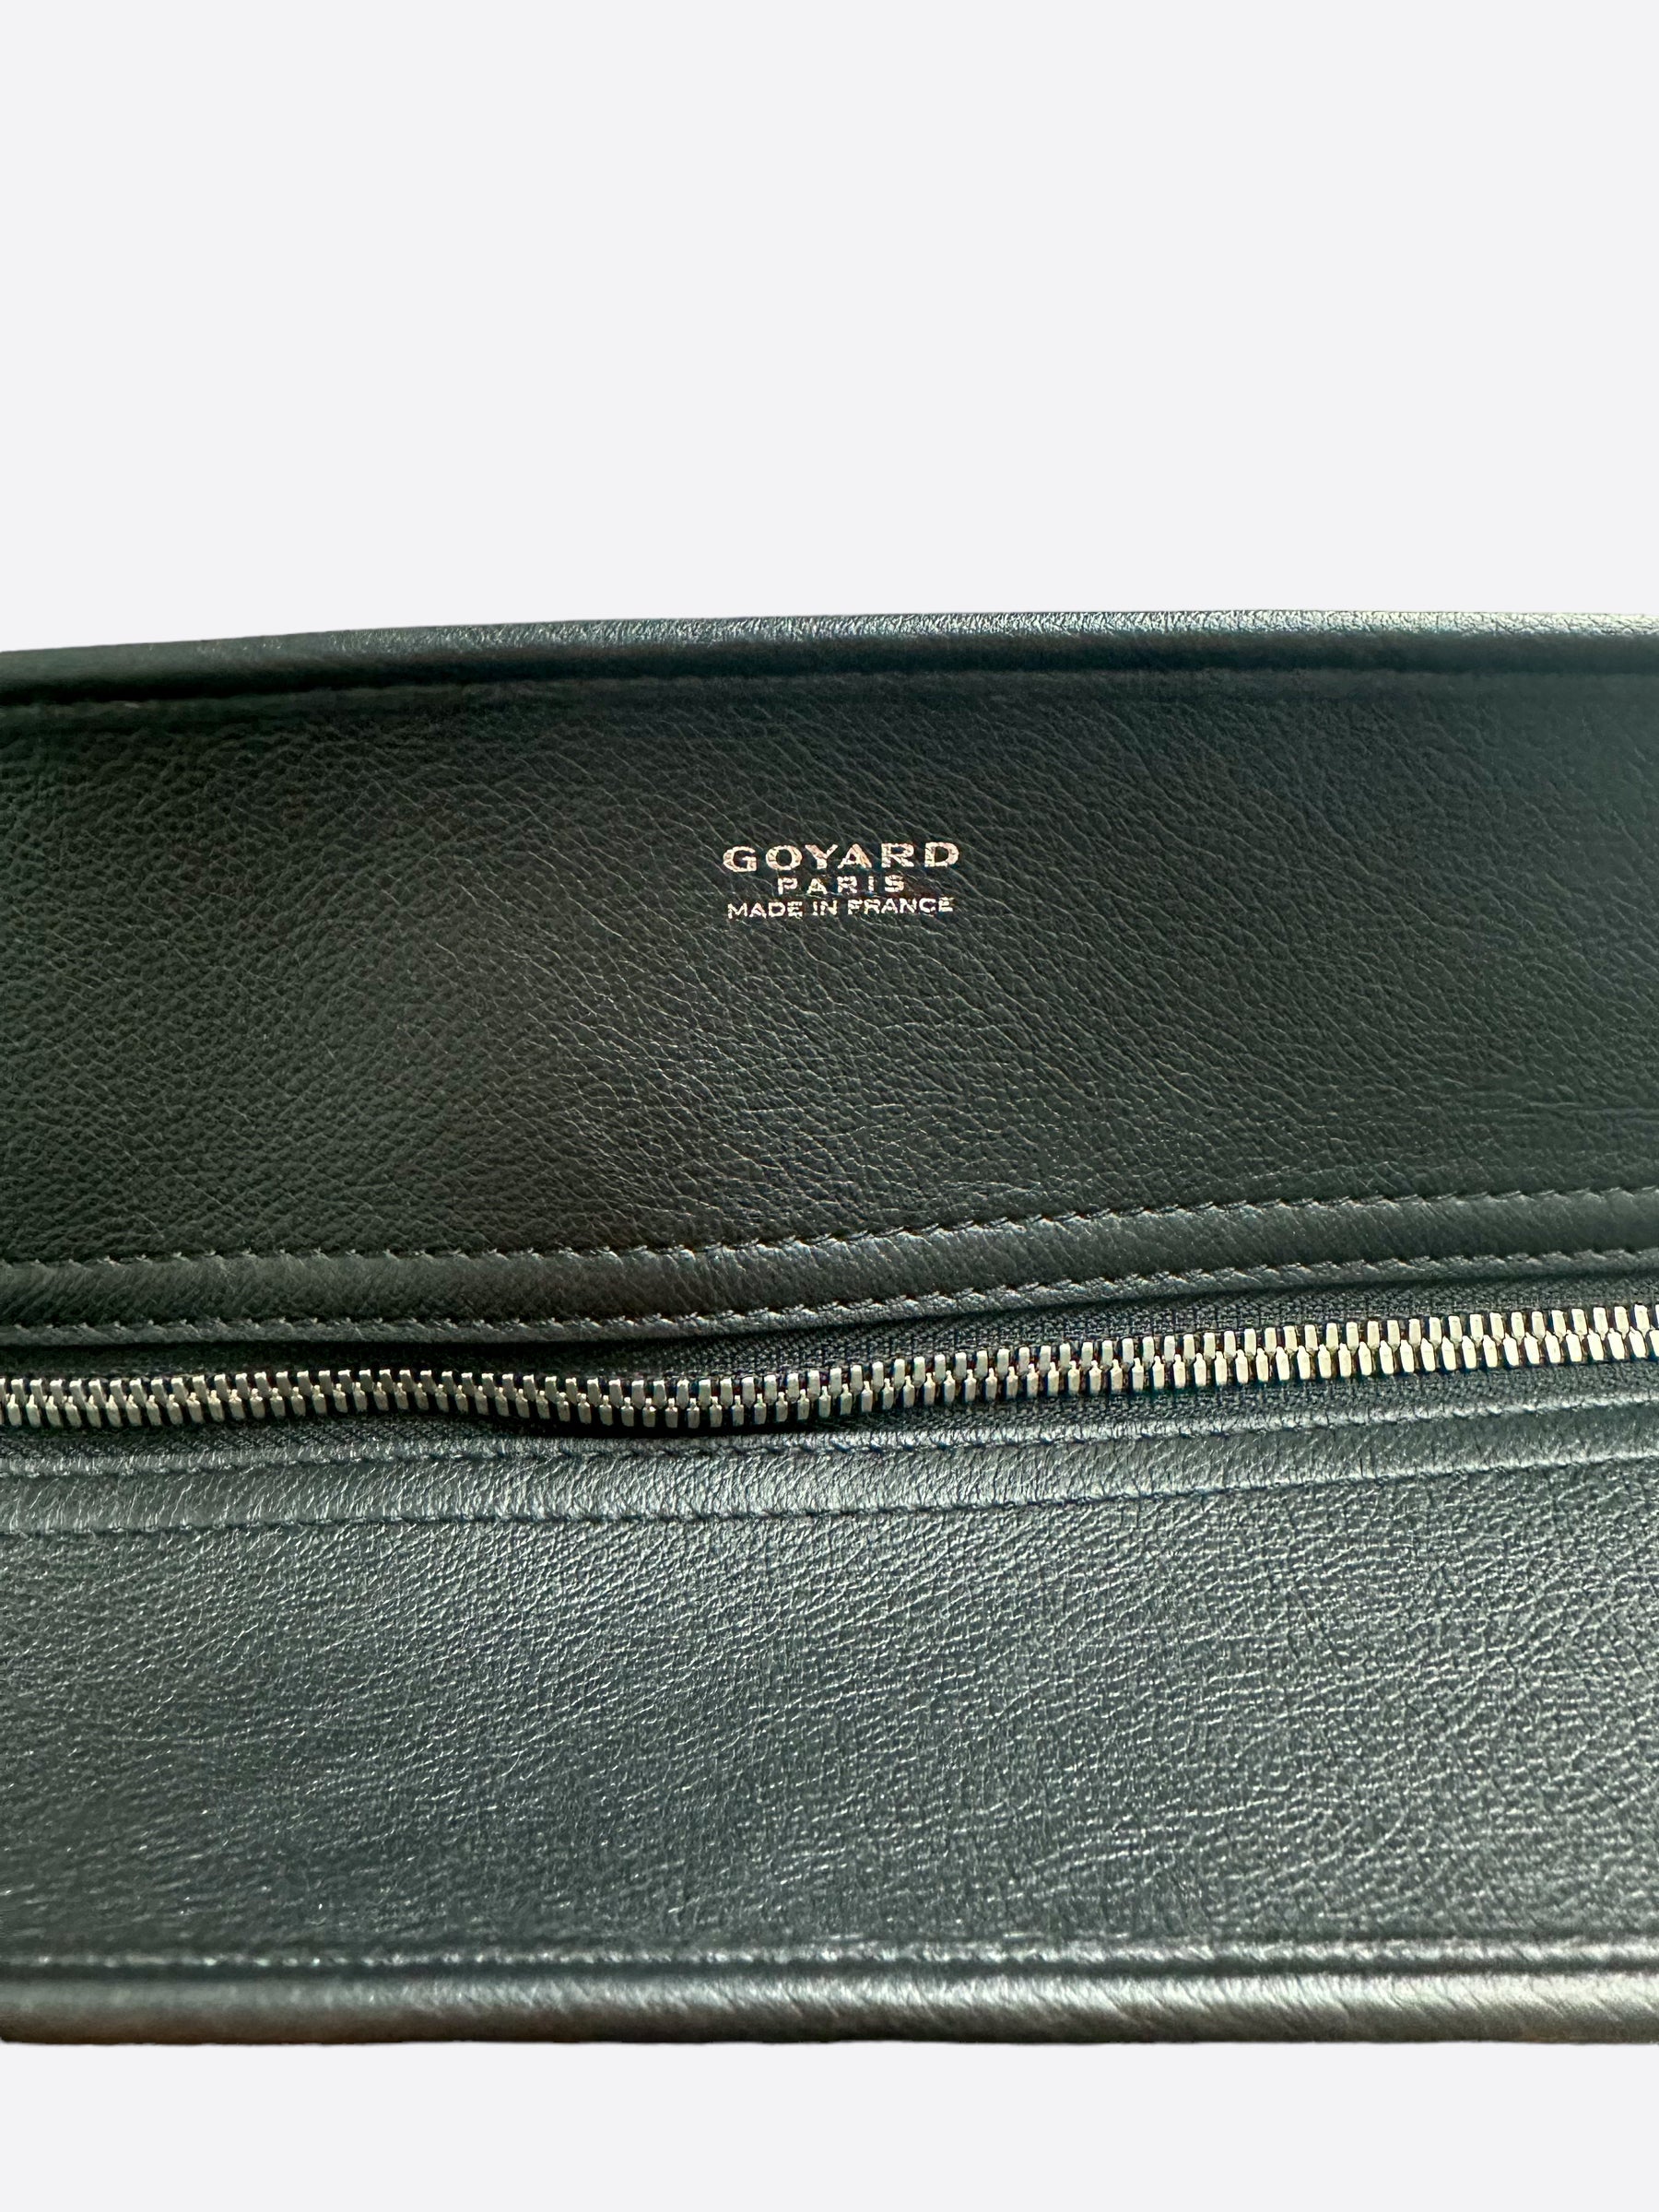 Goyard Off White Leather Long Wallet